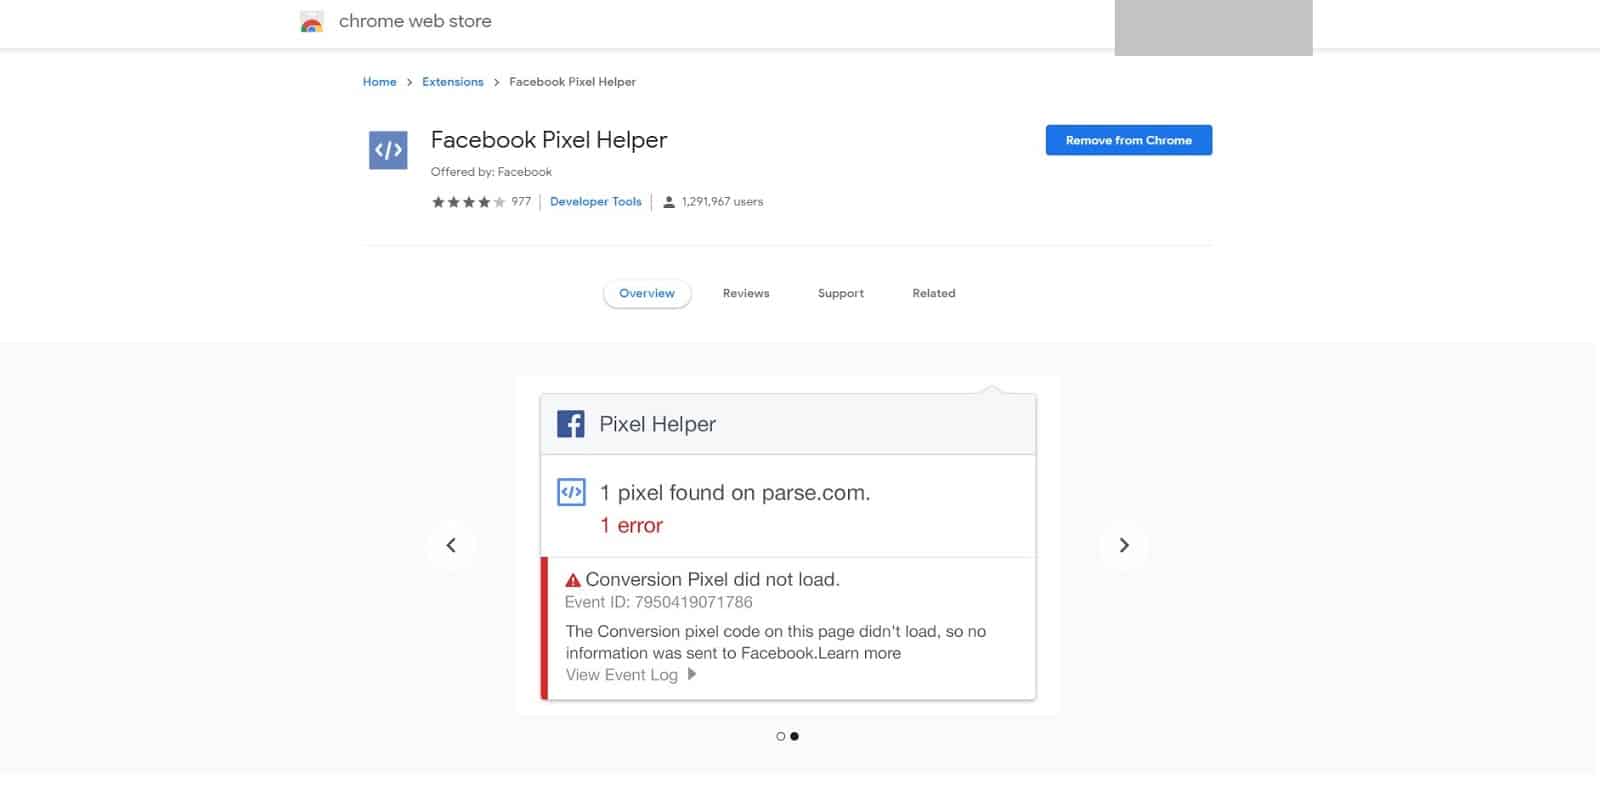 Facebook Pixel Helper Extension in Chrome Web Store